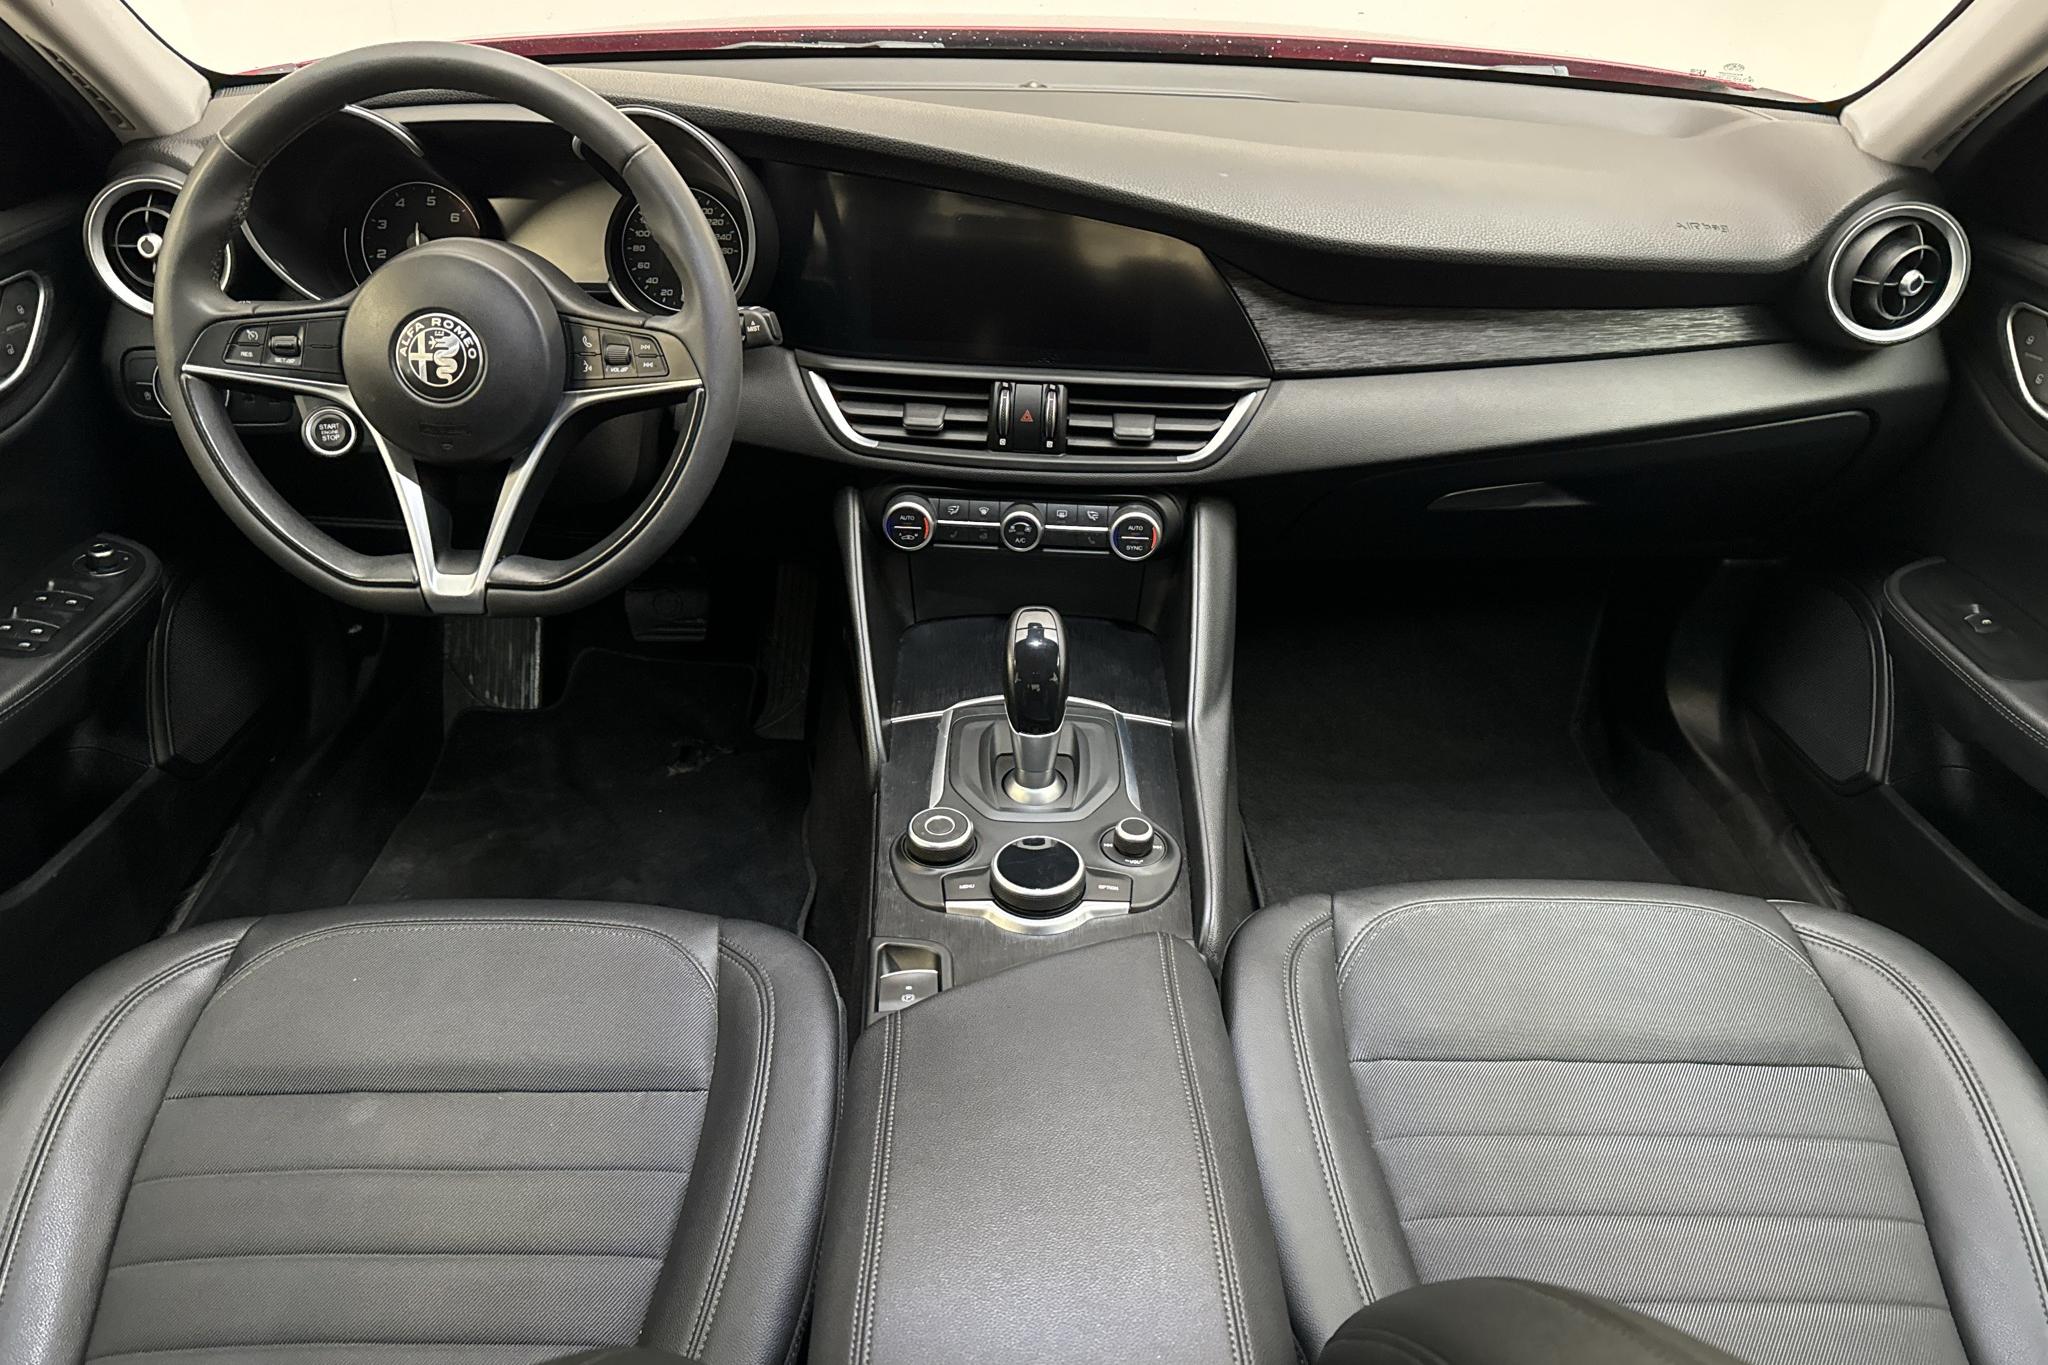 Alfa Romeo Giulia 2.0 (200hk) - 8 879 mil - Automat - röd - 2020